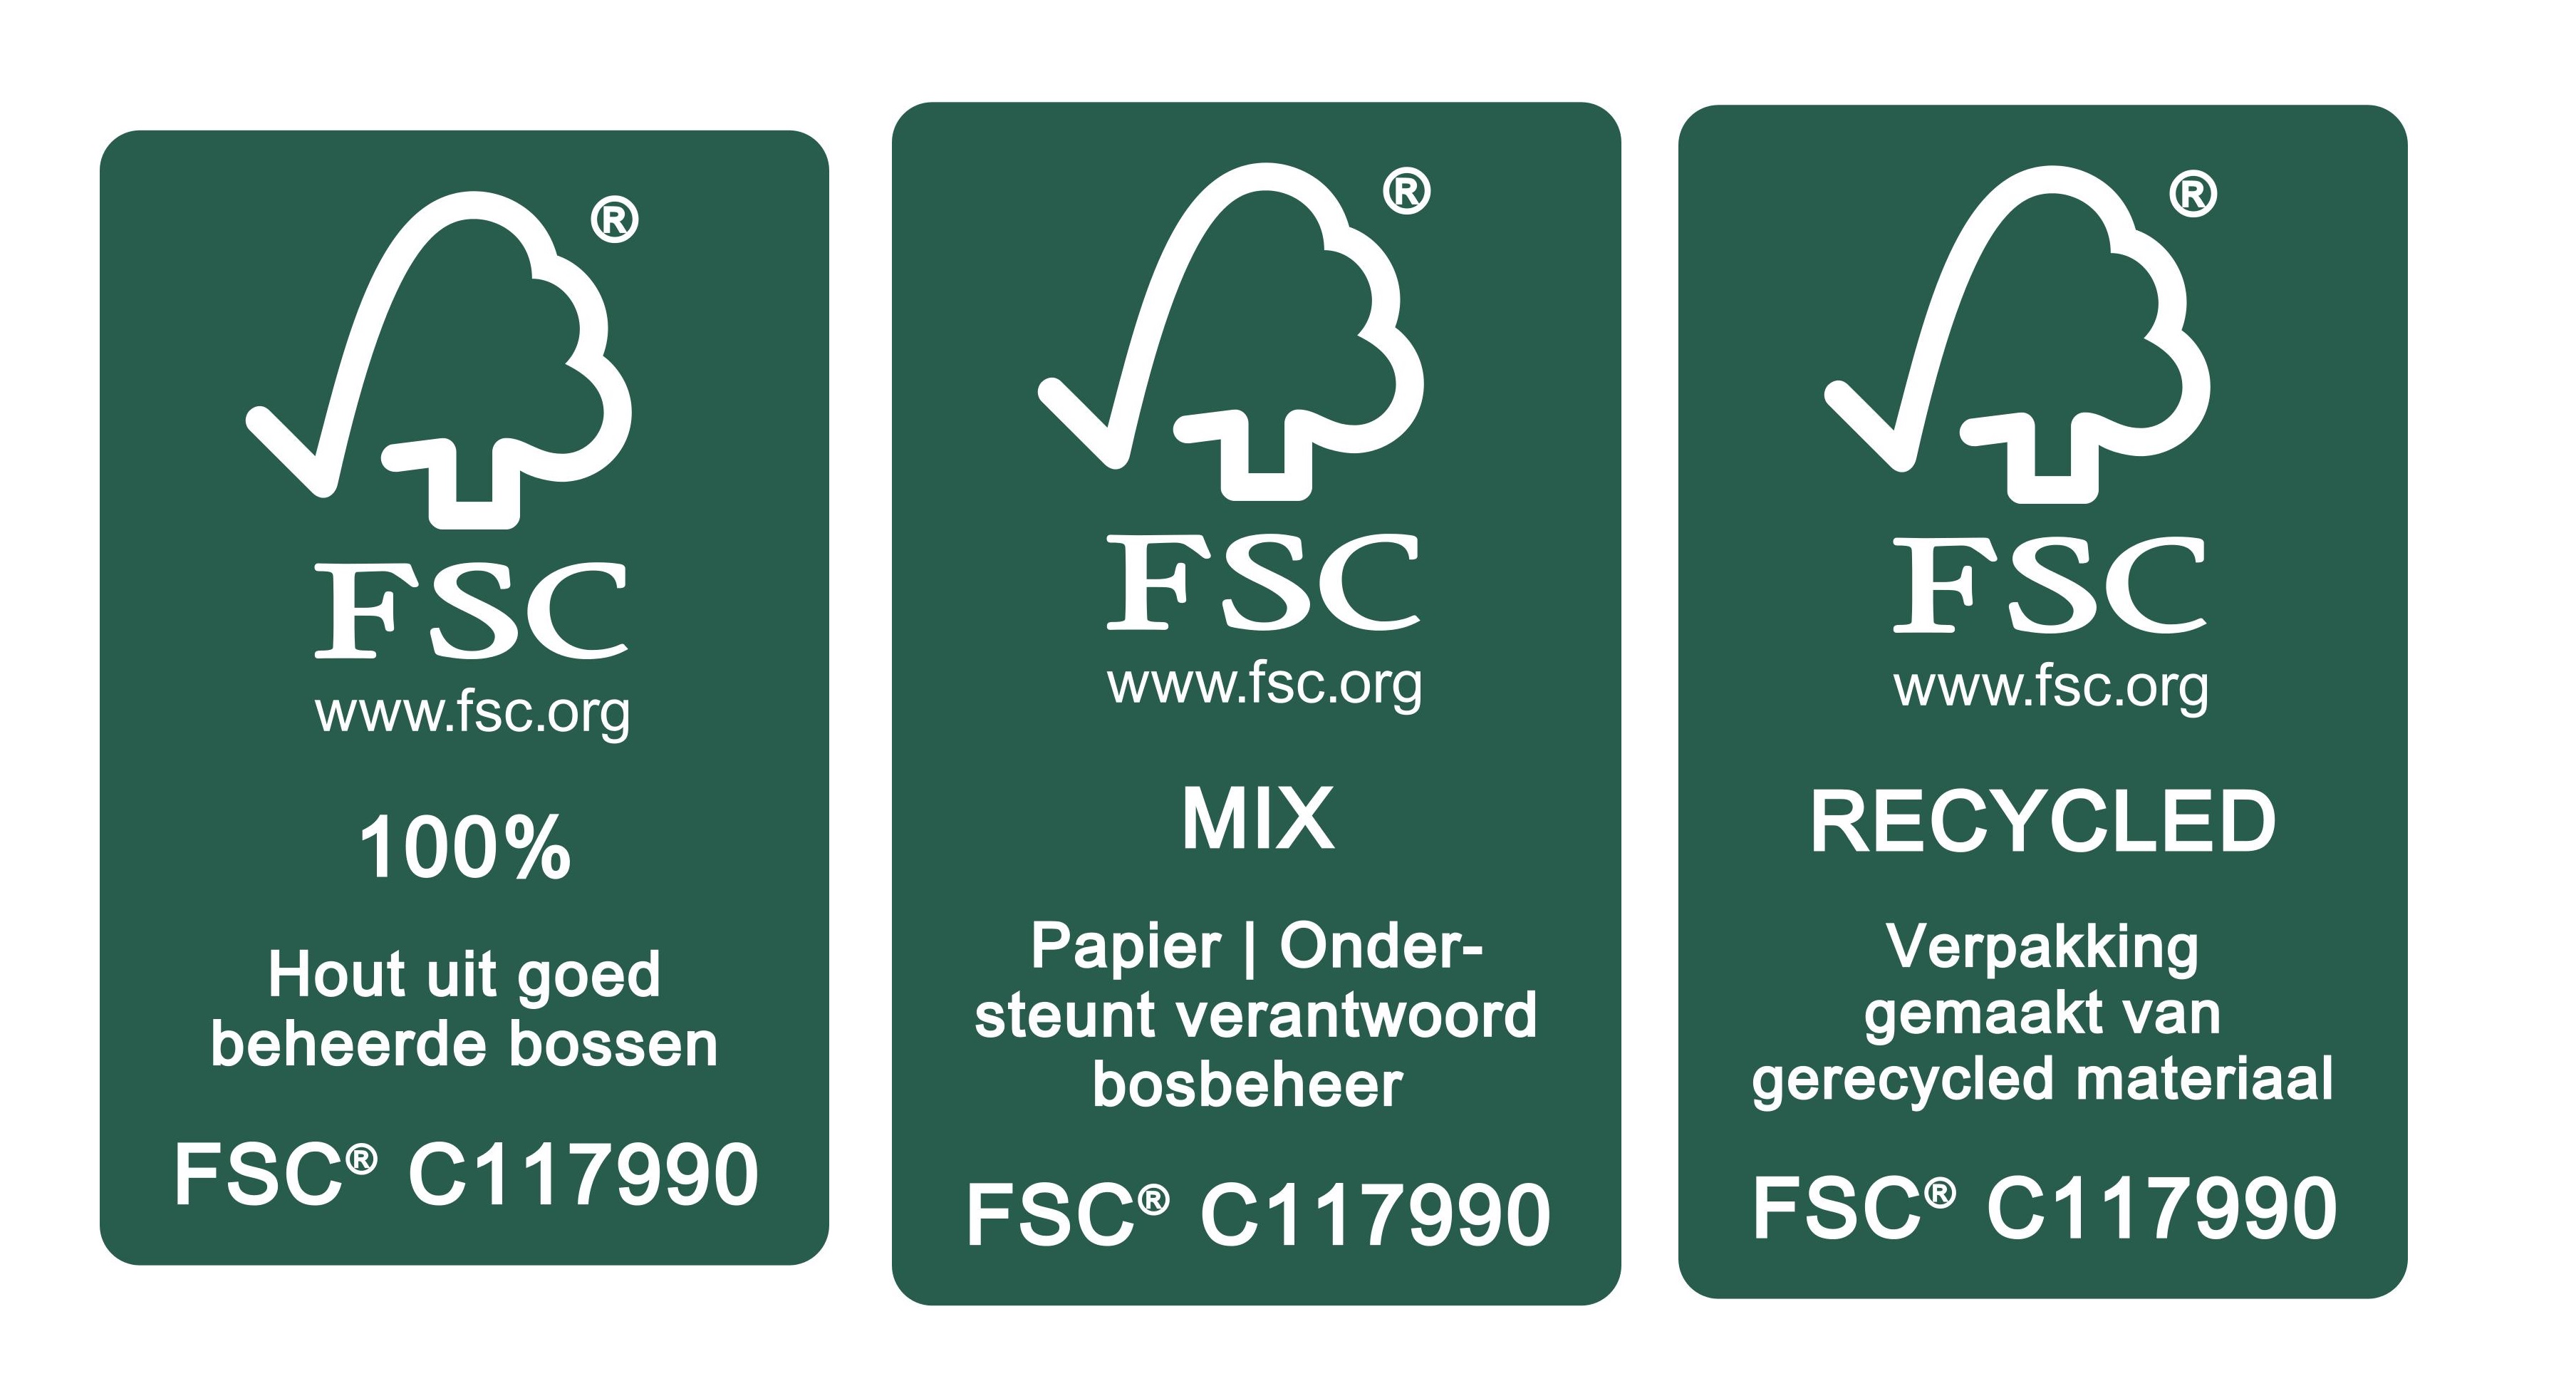 3 types FSC labels